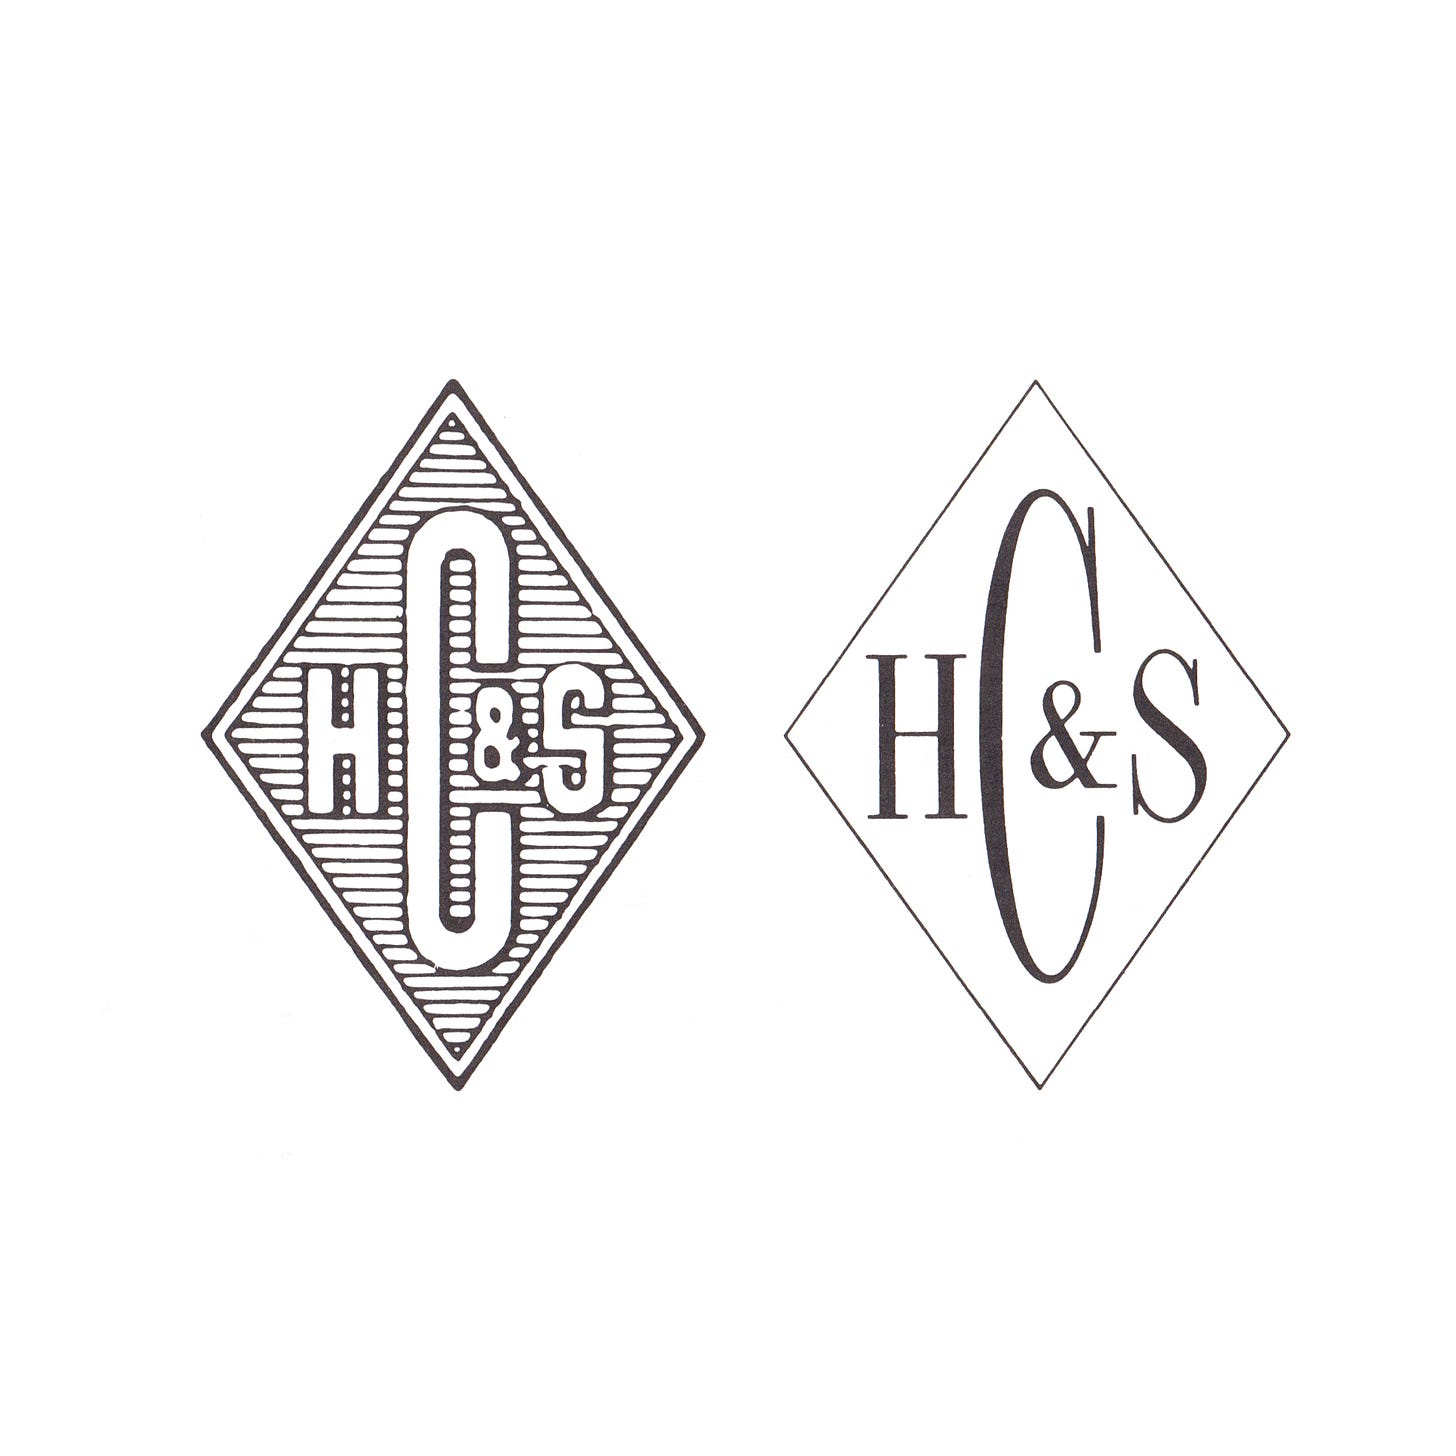 Ole Friis' 1980 logo for paper manufacturer H.Christensen & Søn